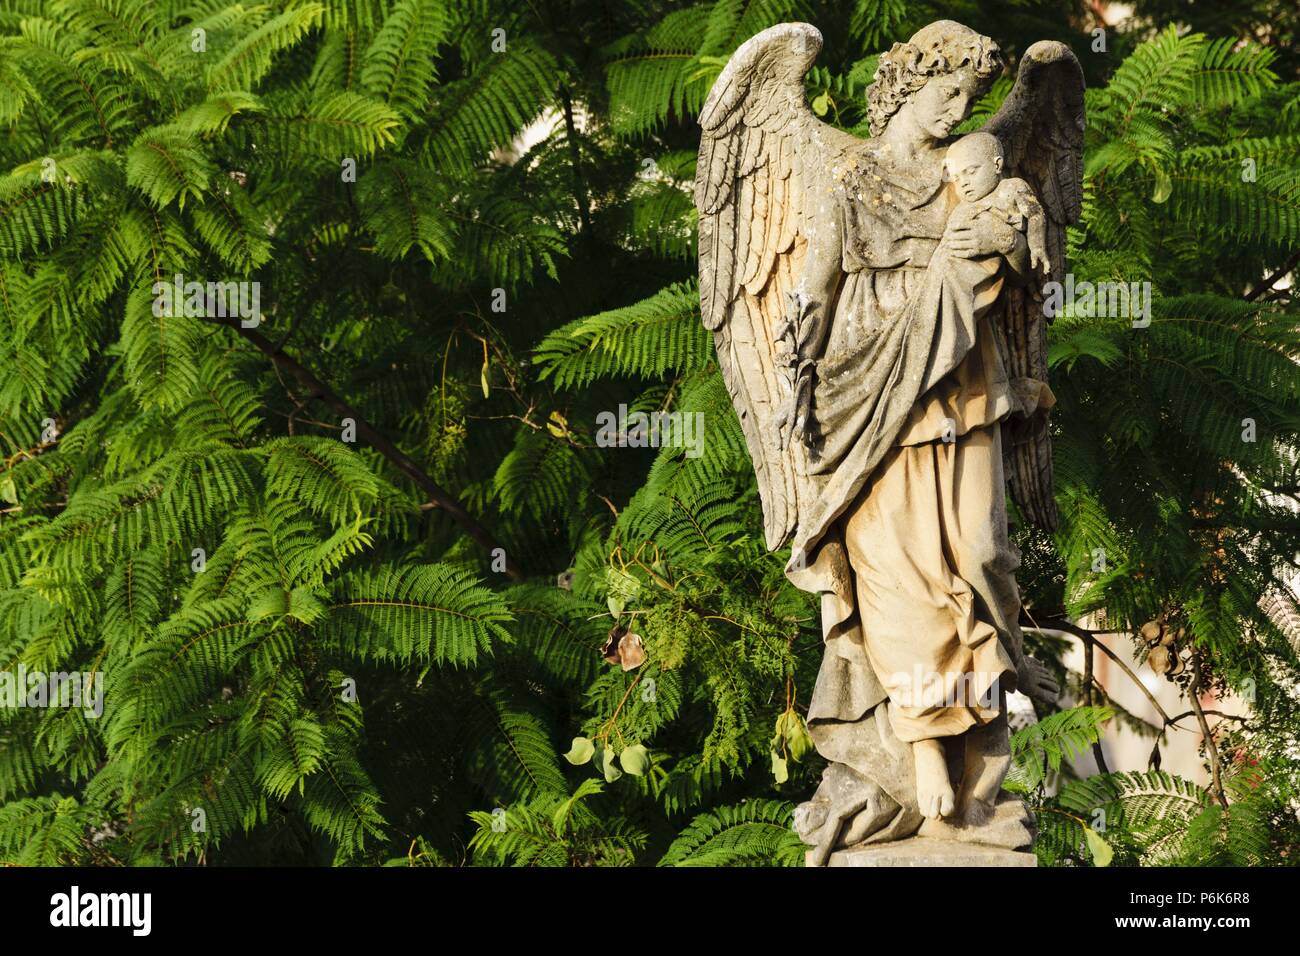 angel con un niño en brazos, cementerio historico de palma, inaugurado el 24 de marzo de 1821,Palma, Mallorca, islas baleares, Spain. Stock Photo